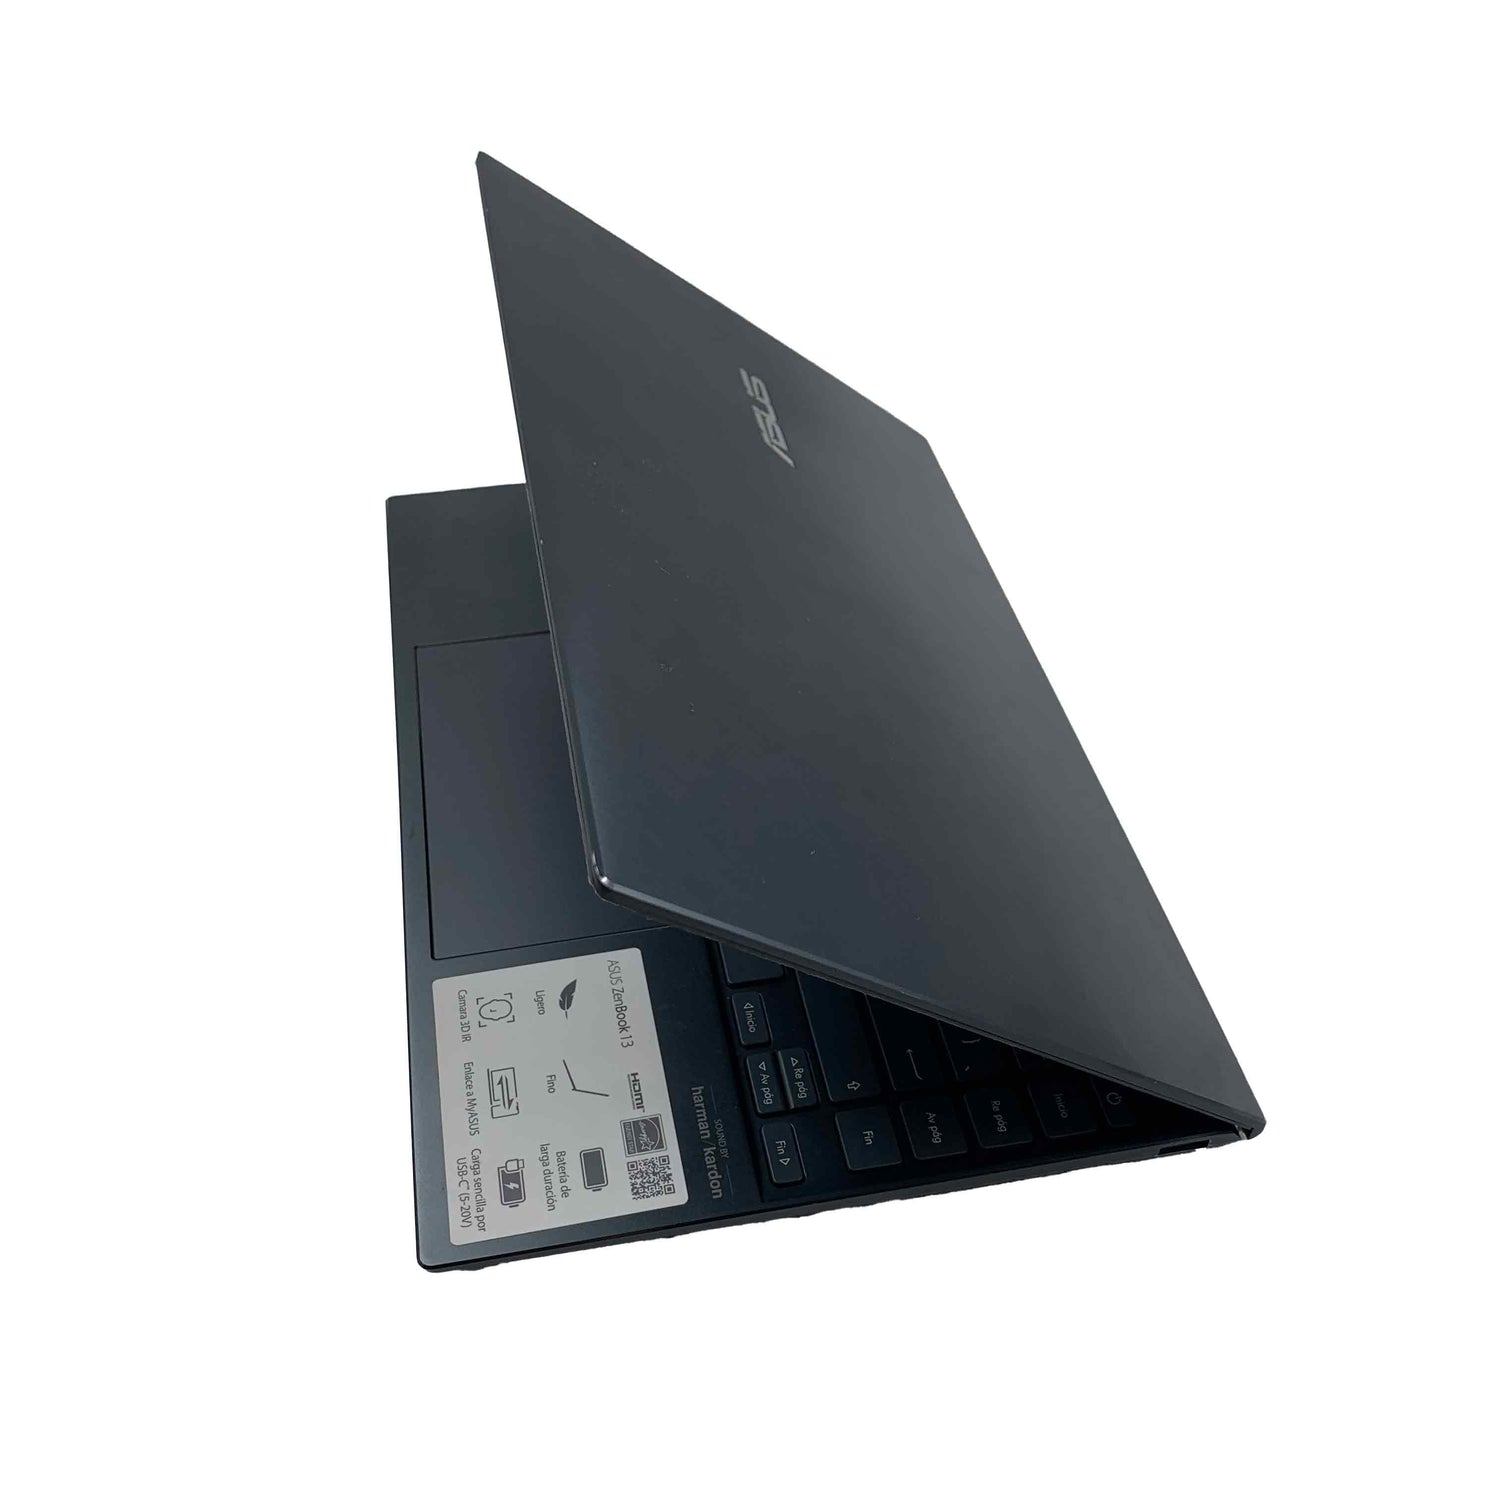 Laptop ASUS Zenbook 13 UX325JA-AB51 (2020) (seminuevo)